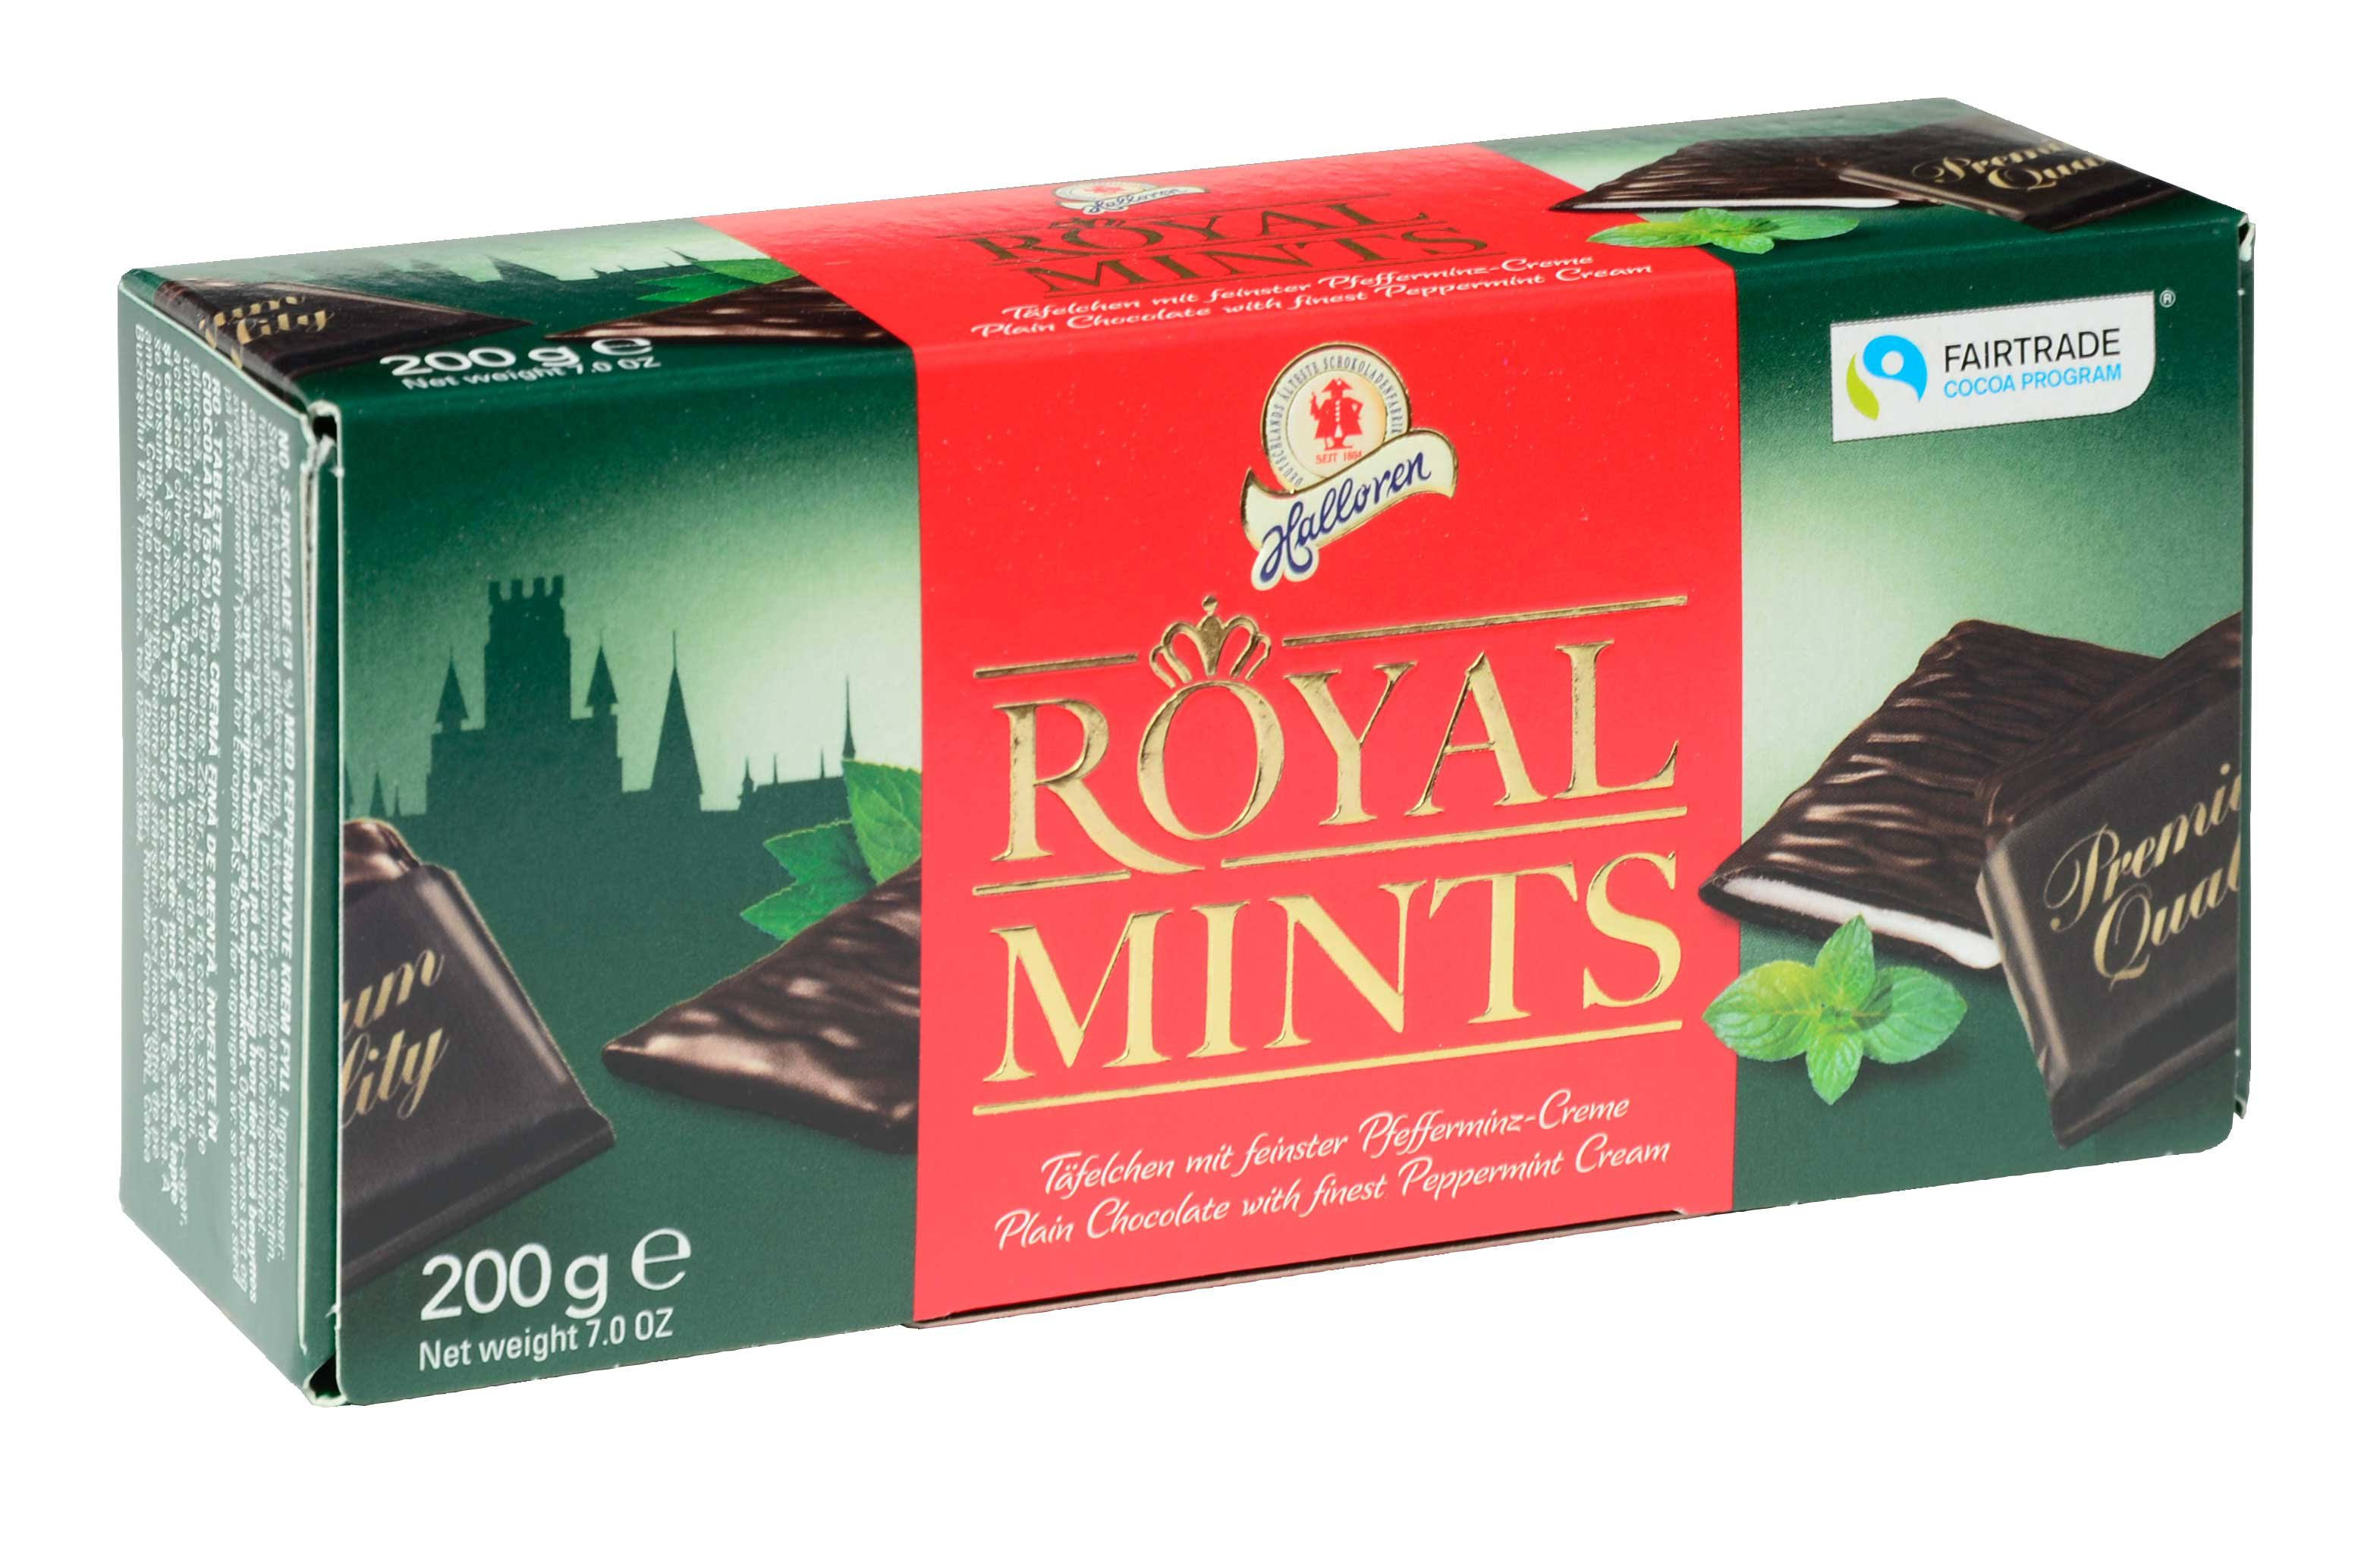 Royal Mints Plain Chocolate with Finest Peppermint Cream - 7 oz